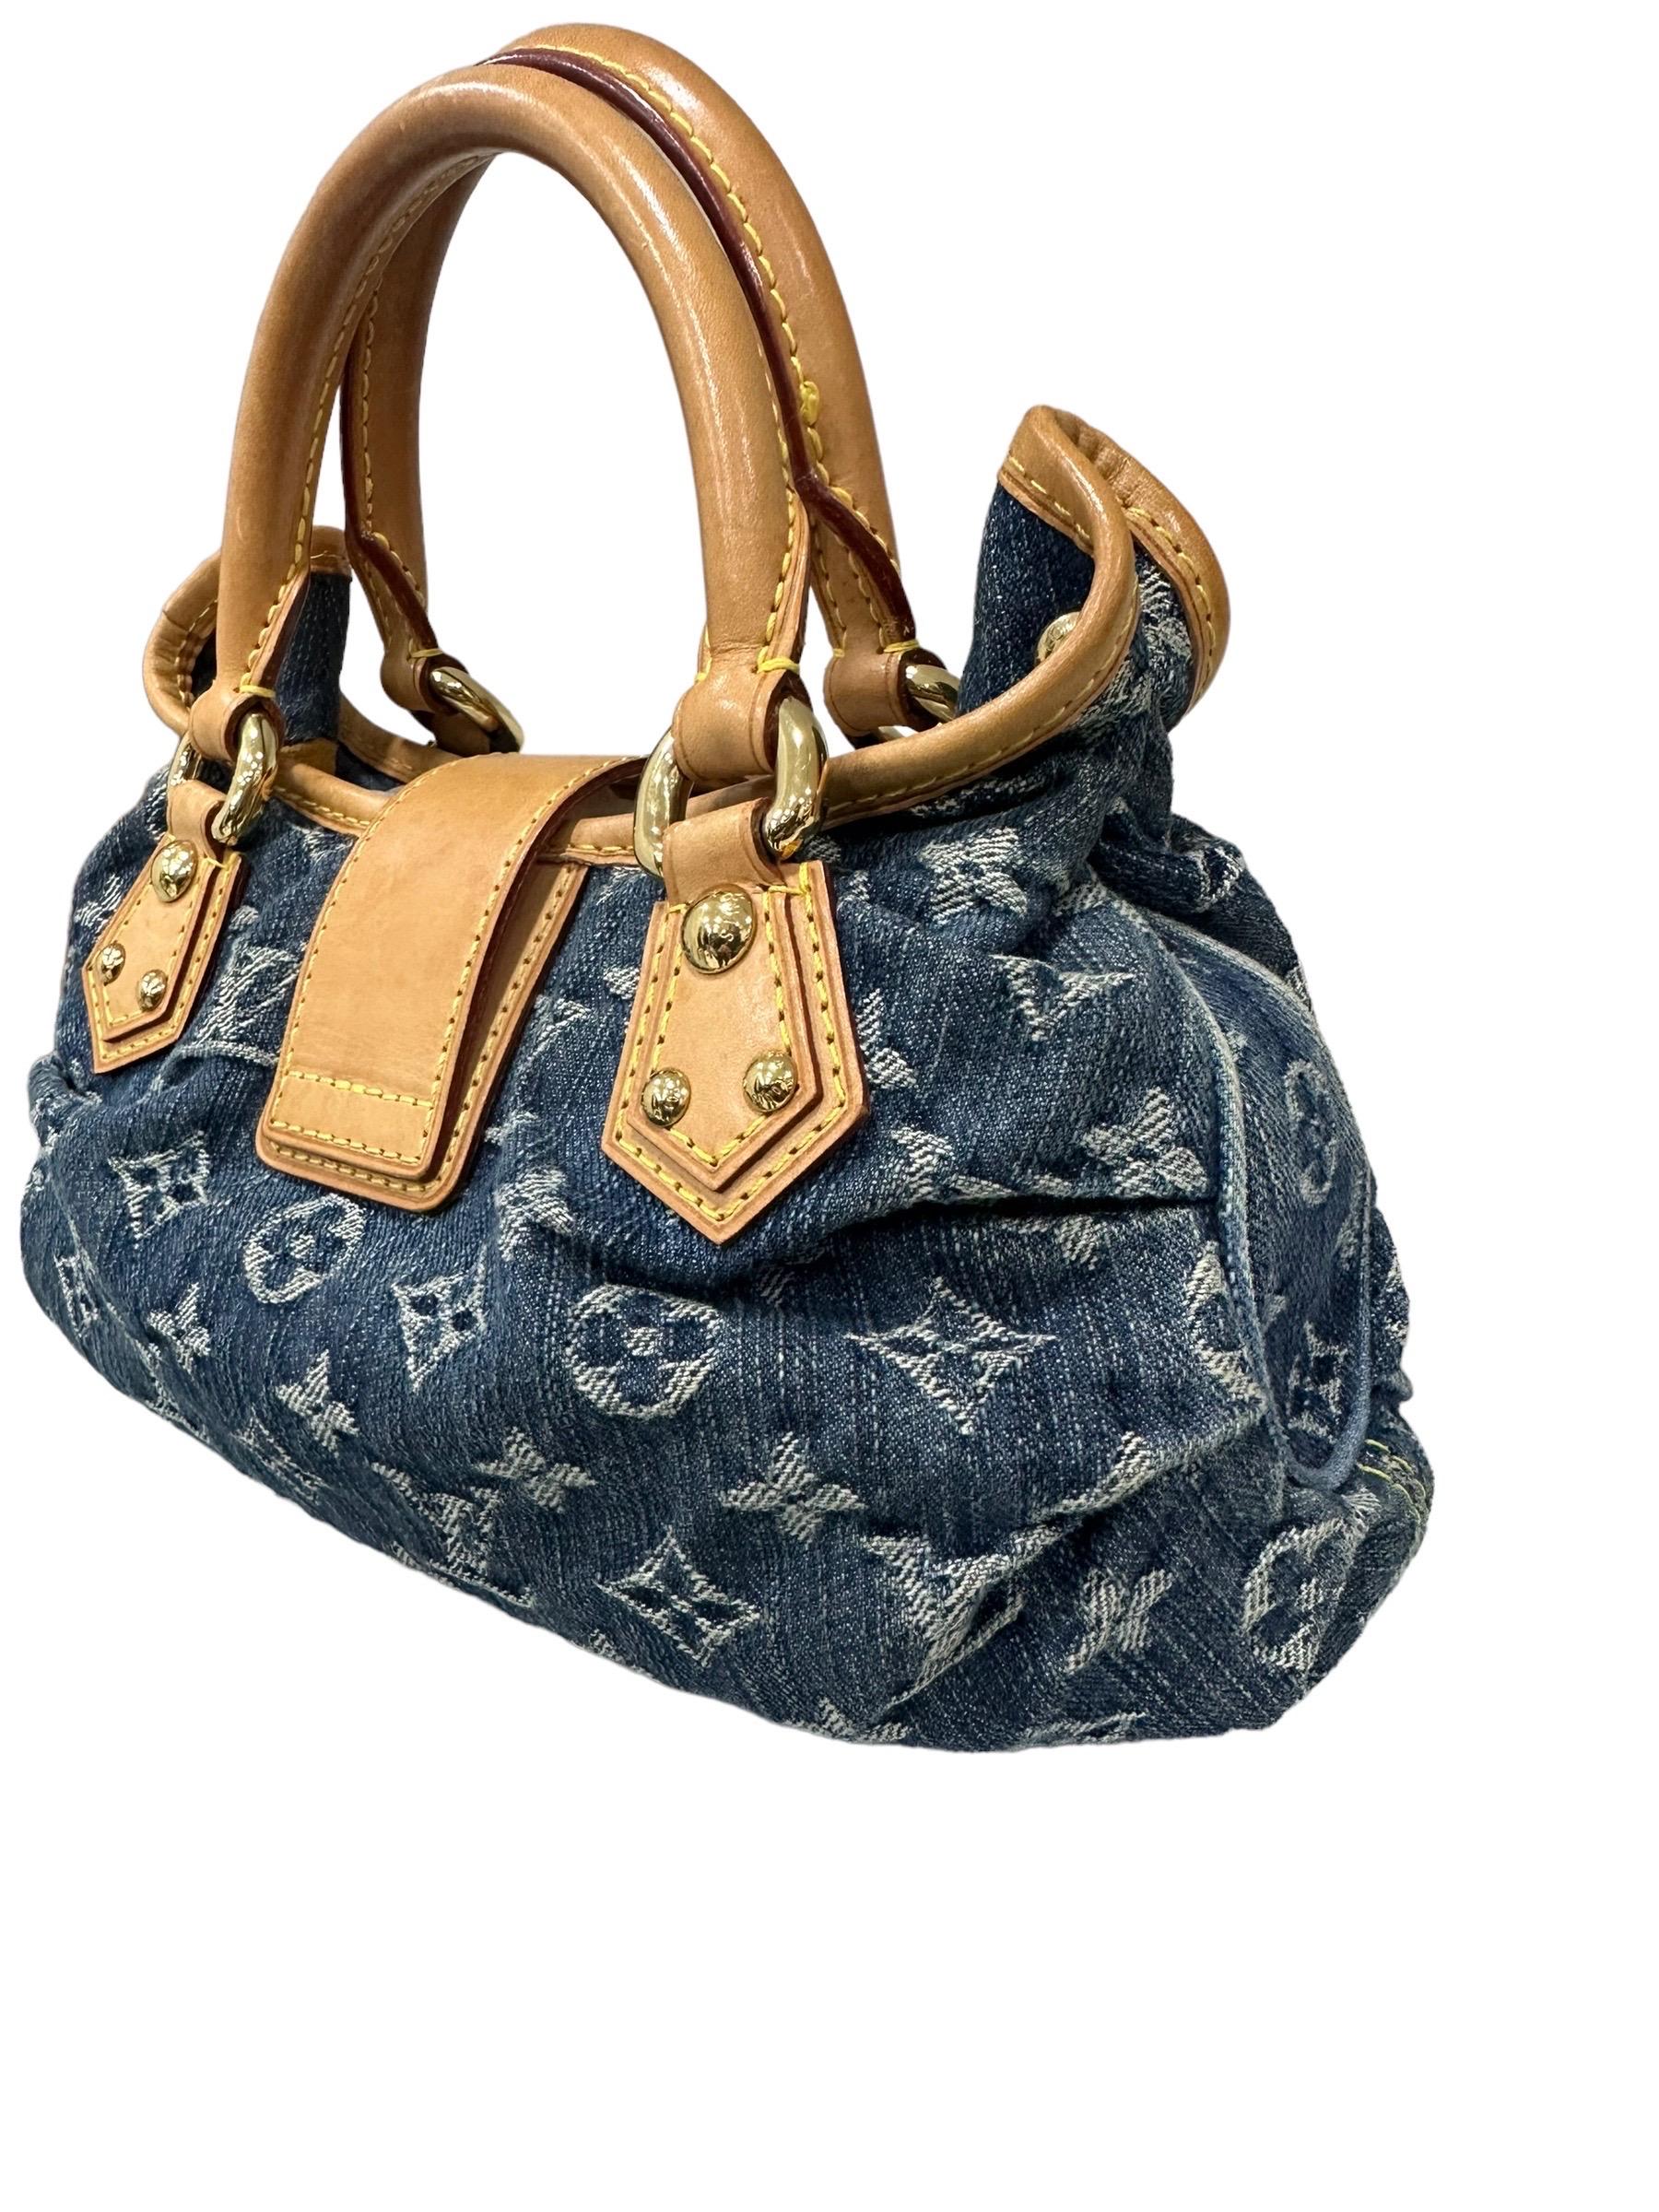 Women's 2006 Louis Vuitton Pleaty PM Denim Top Handle Bag